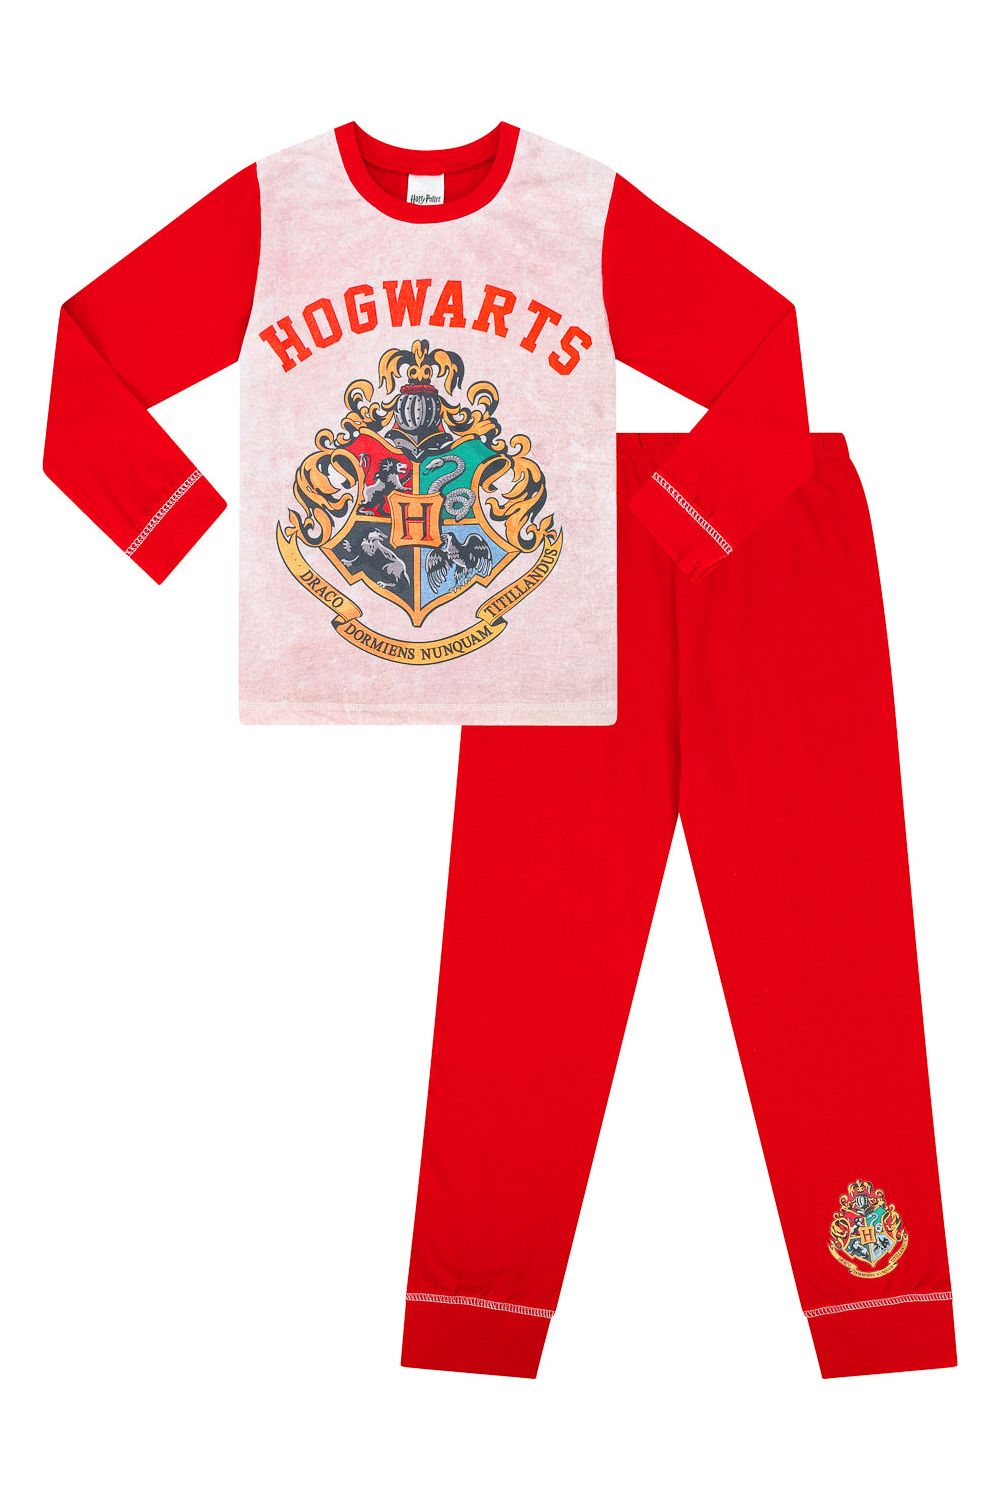 Harry Potter top and bottom pyjama set